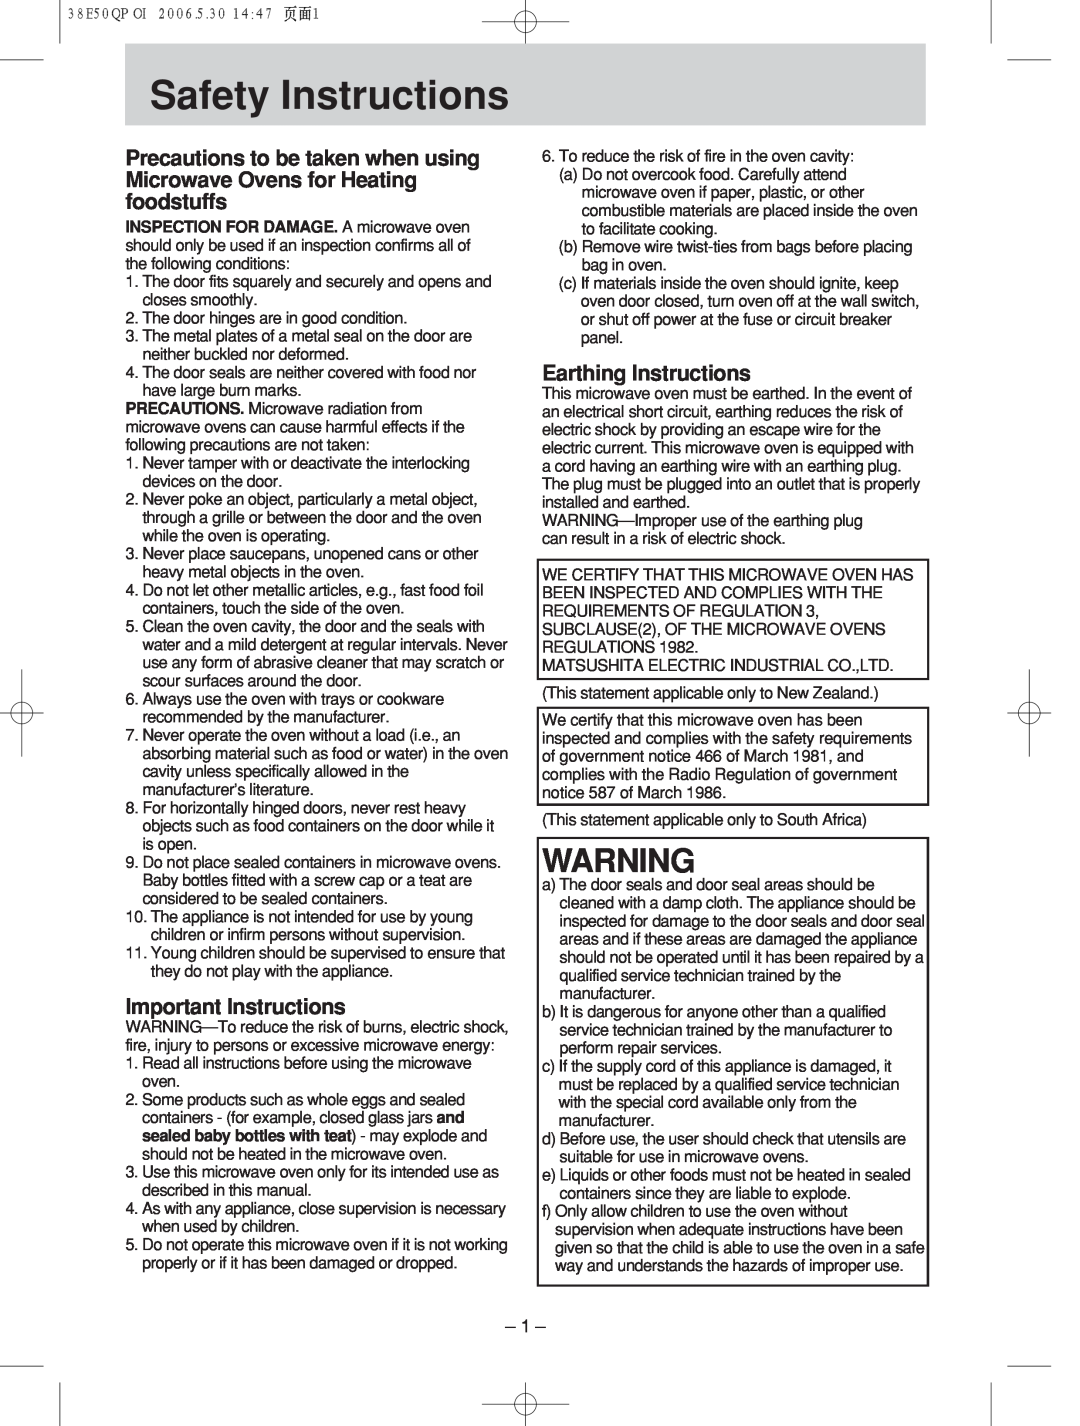 Panasonic NN-ST756W manual Safety!!! Instructions, Important Instructions, Earthing Instructions 